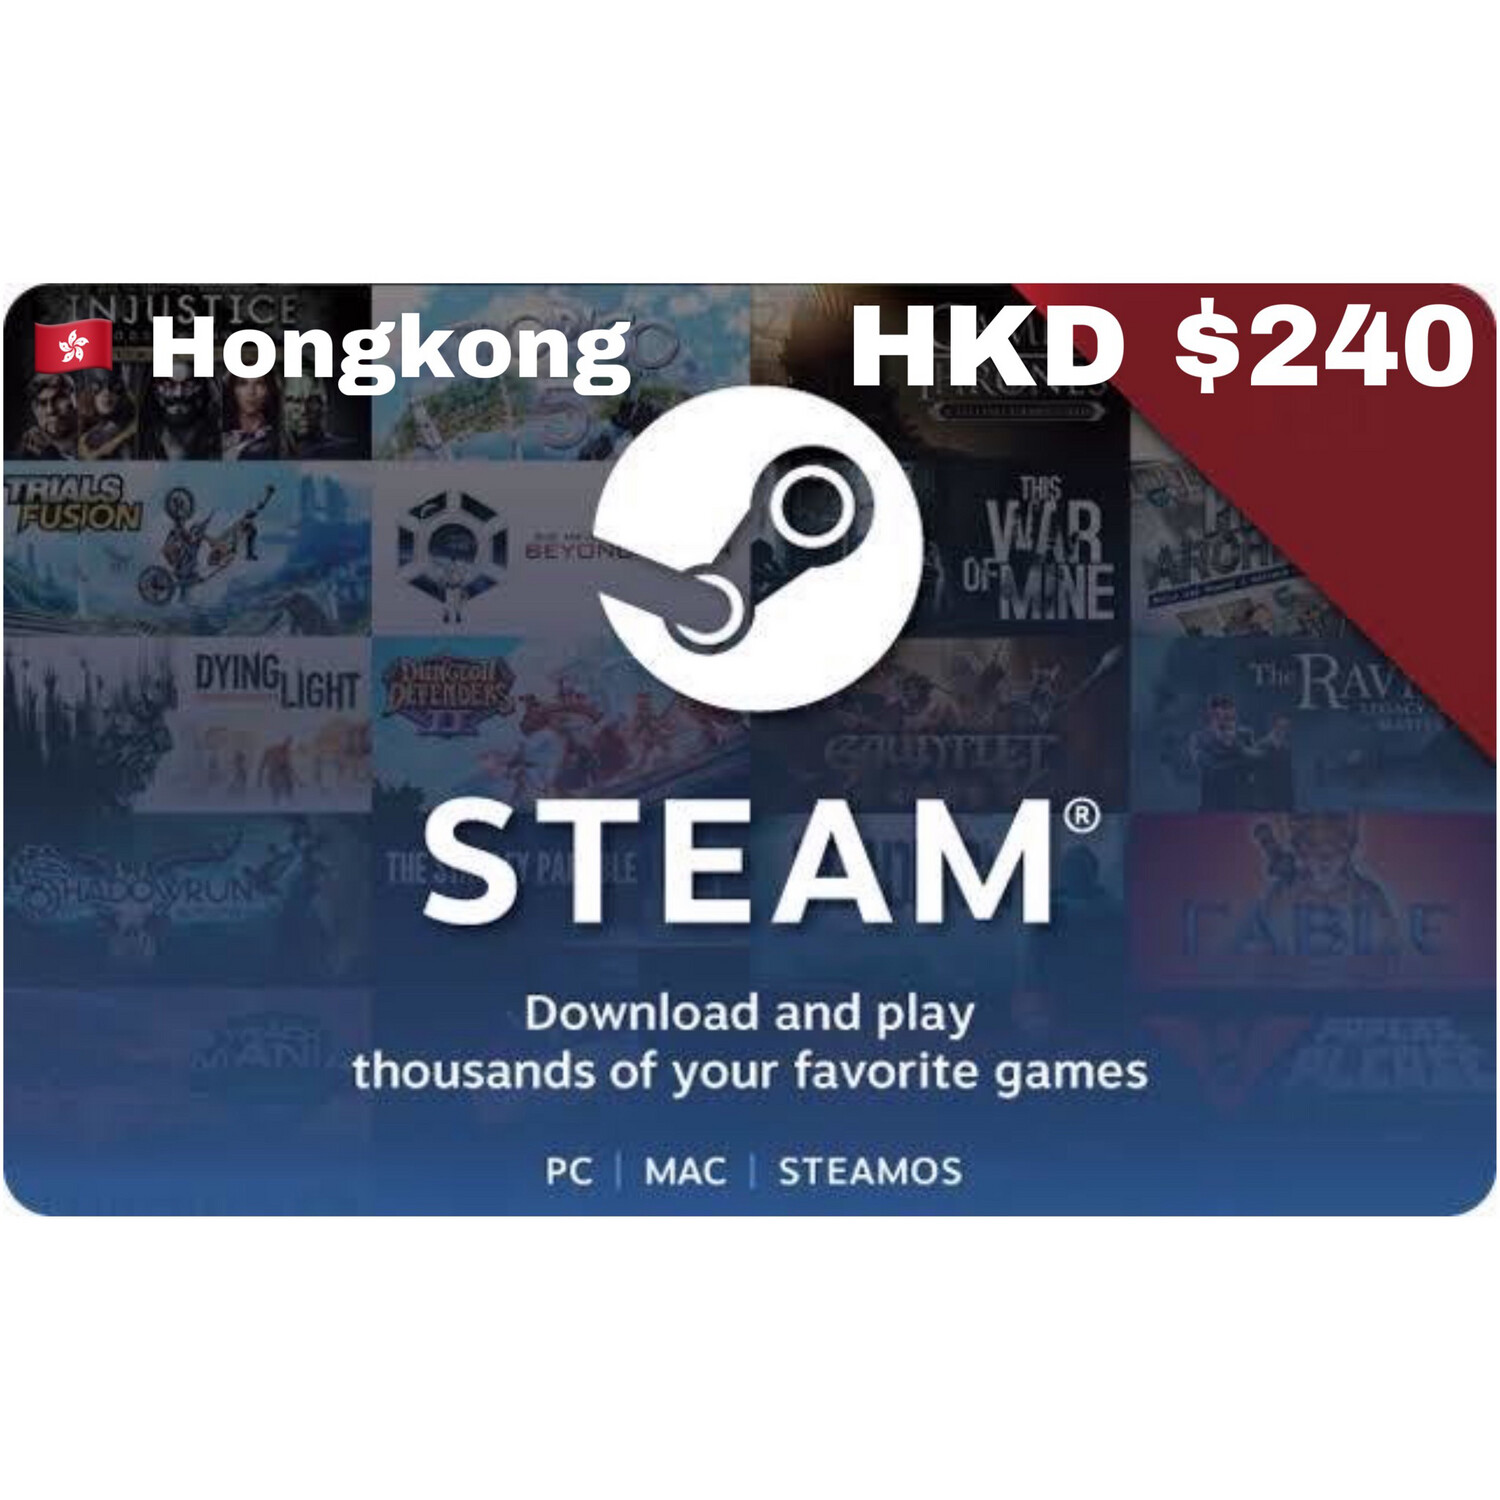 Steam Wallet Code Hongkong HKD $240